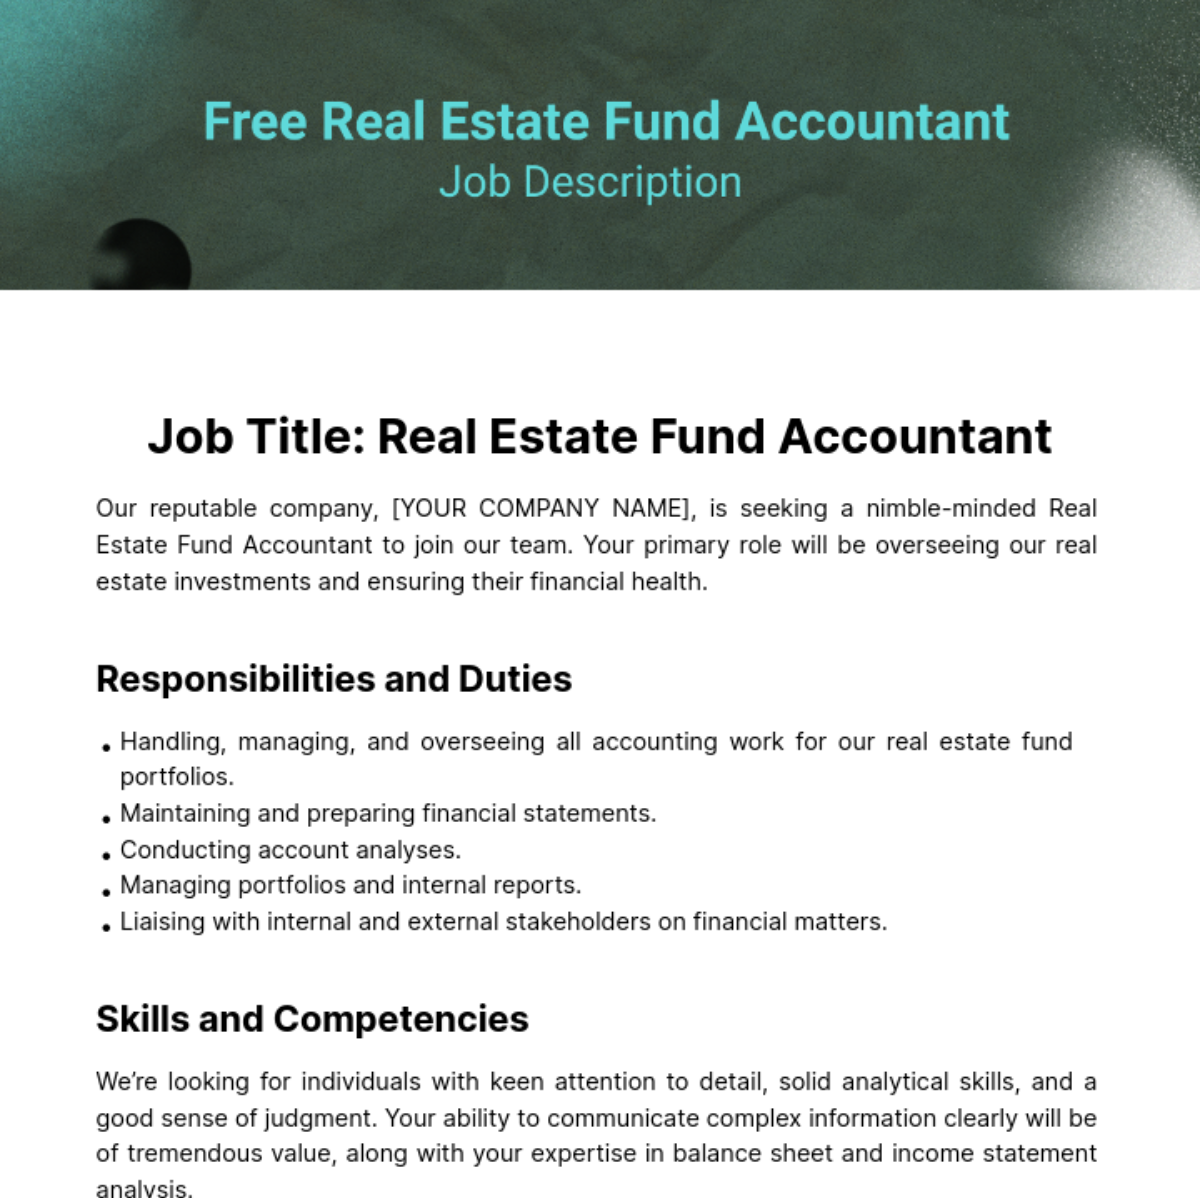 Real Estate Fund Accountant Job Description Template